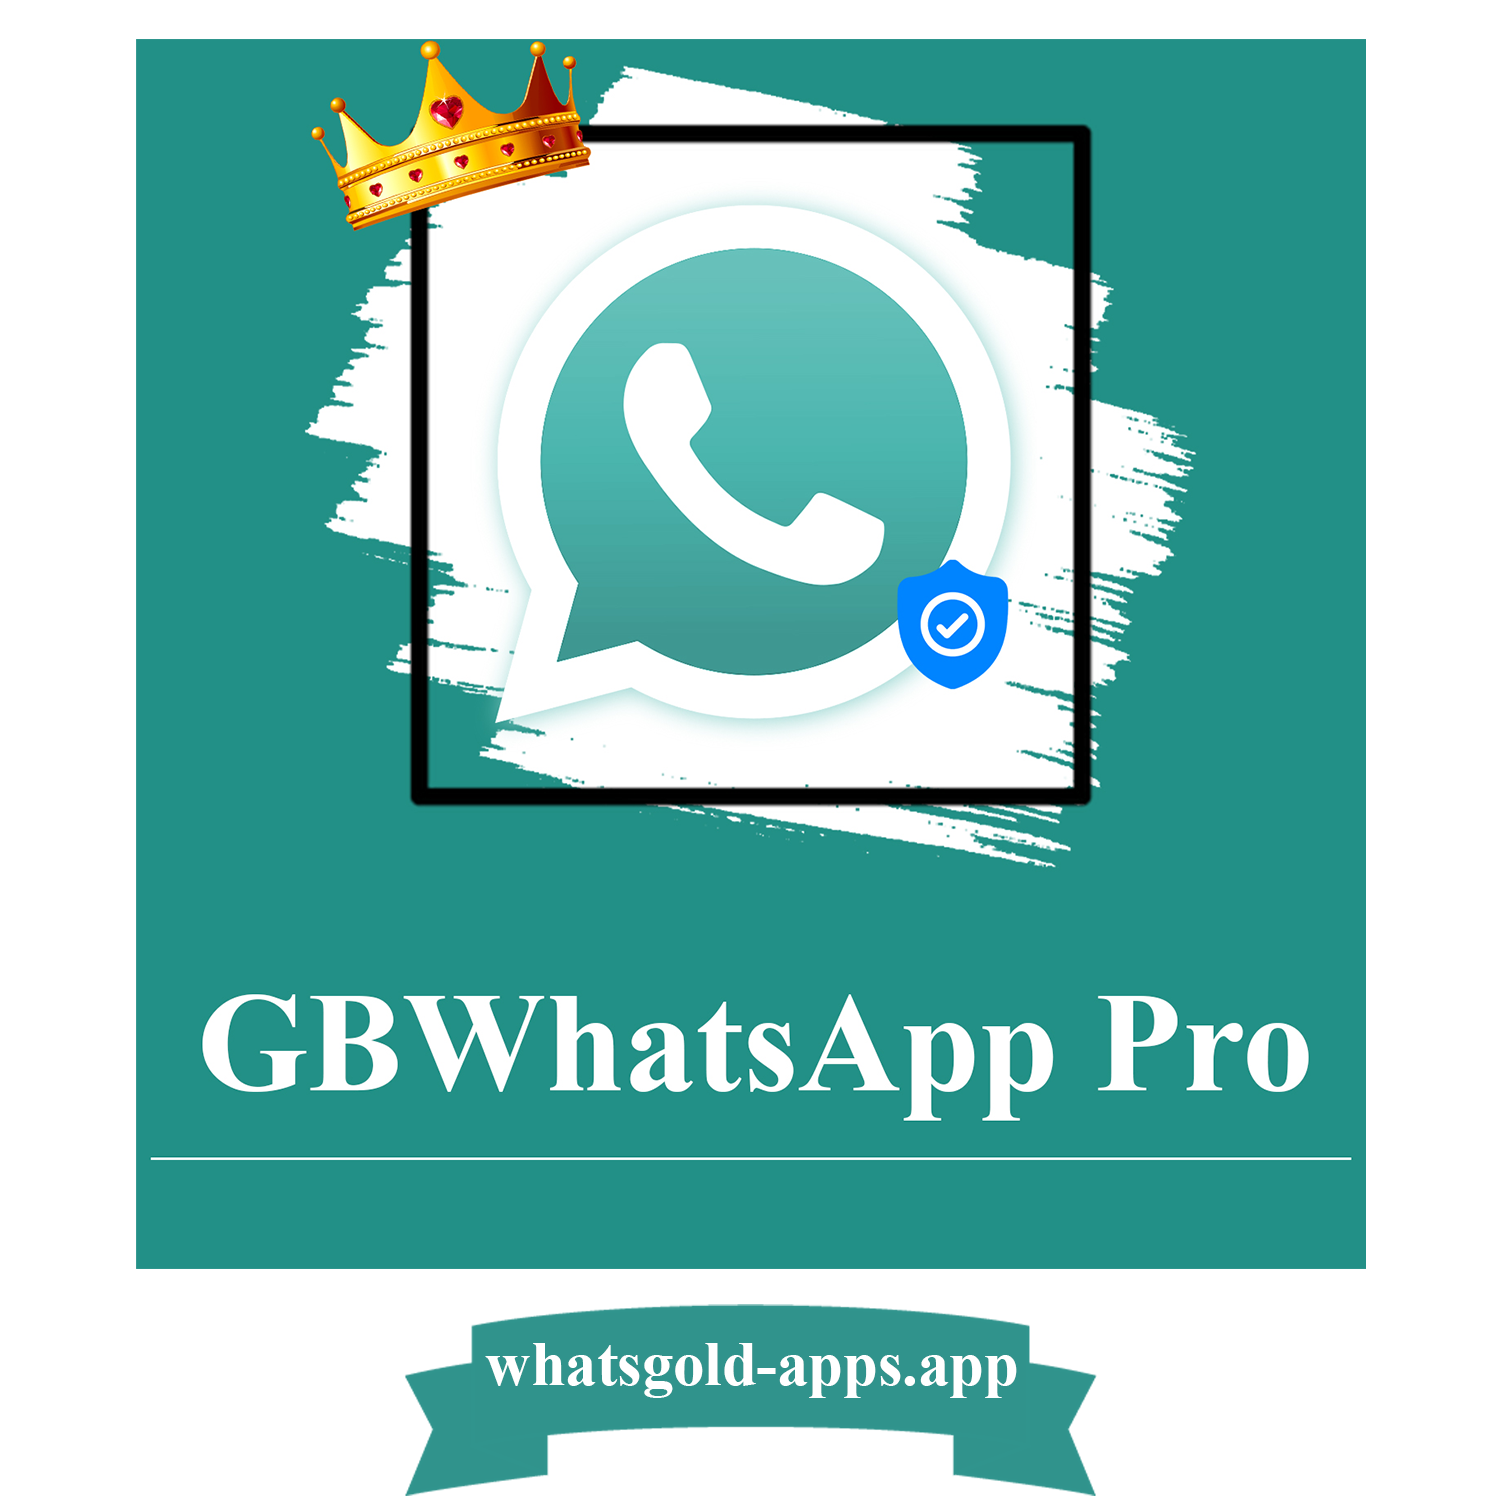 GBWhatsApp Pro